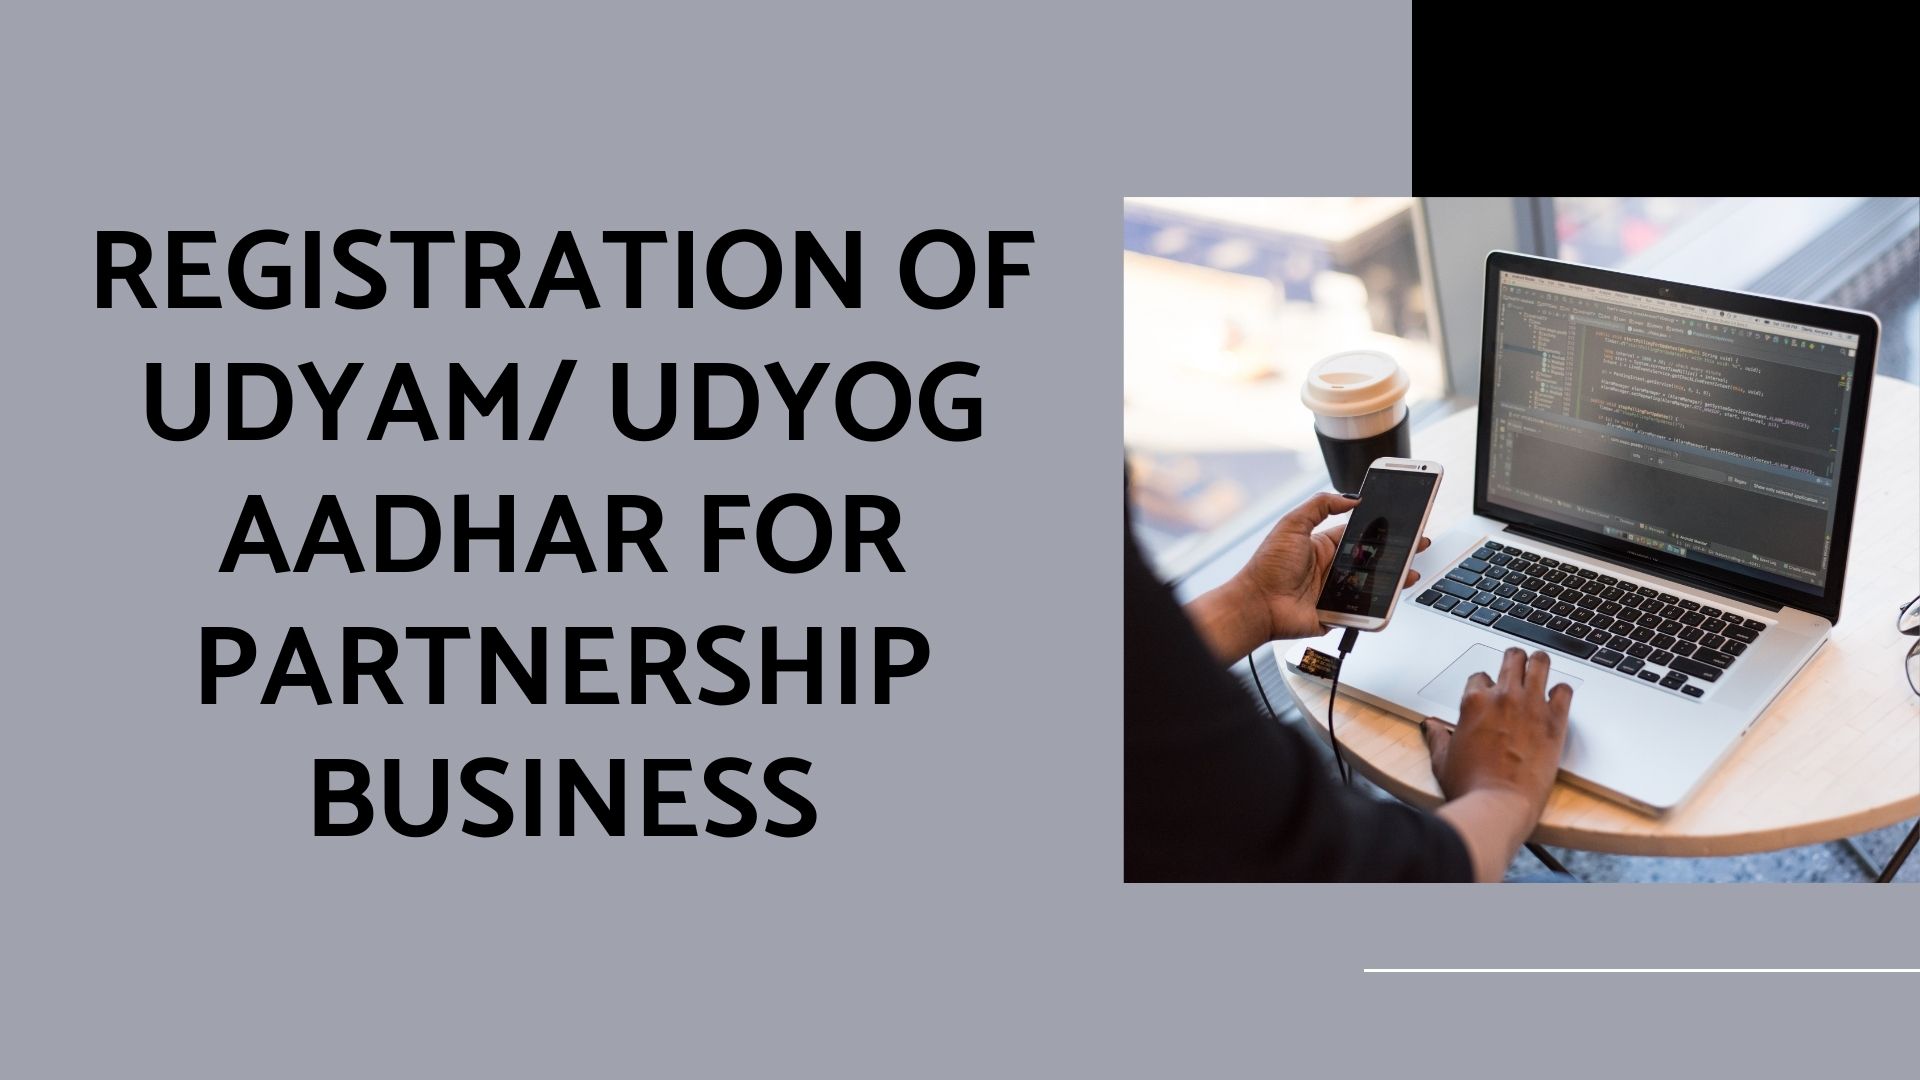 REGISTRATION OF UDYAM UDYOG AADHAR FOR PARTNERSHIP BUSINESS